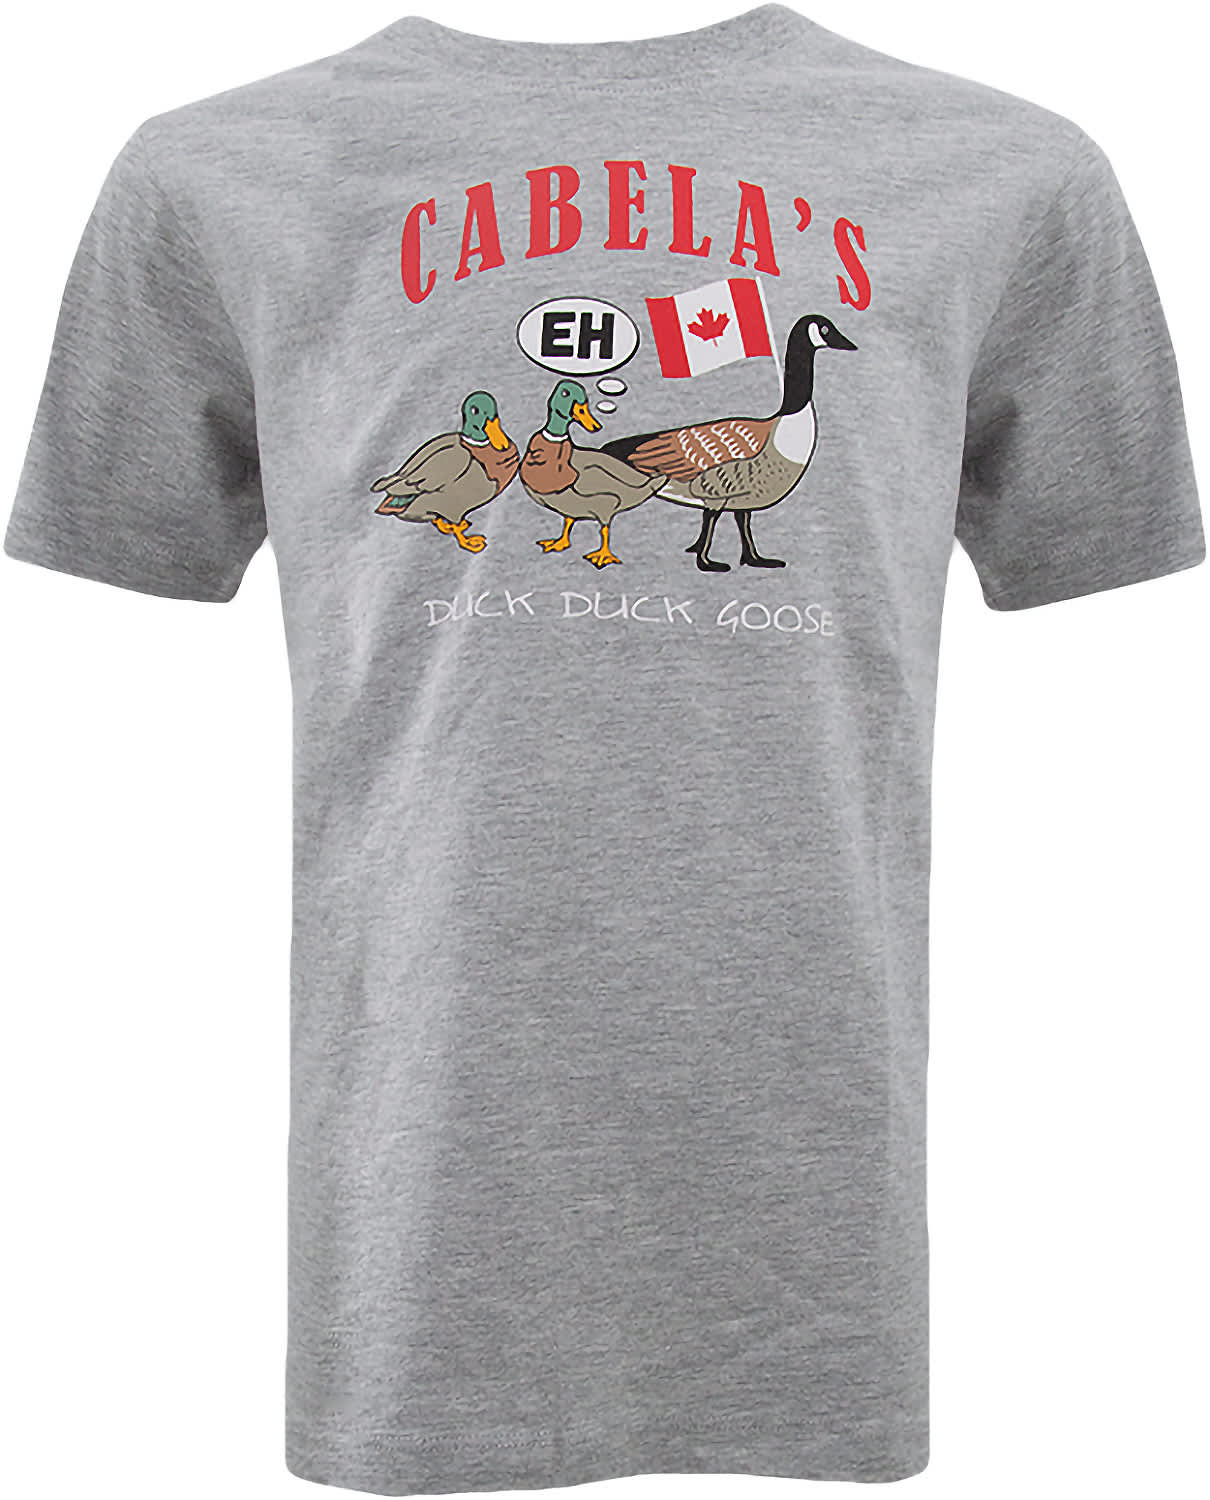 Cabela’s Toddlers’ Short-Sleeve T-Shirt